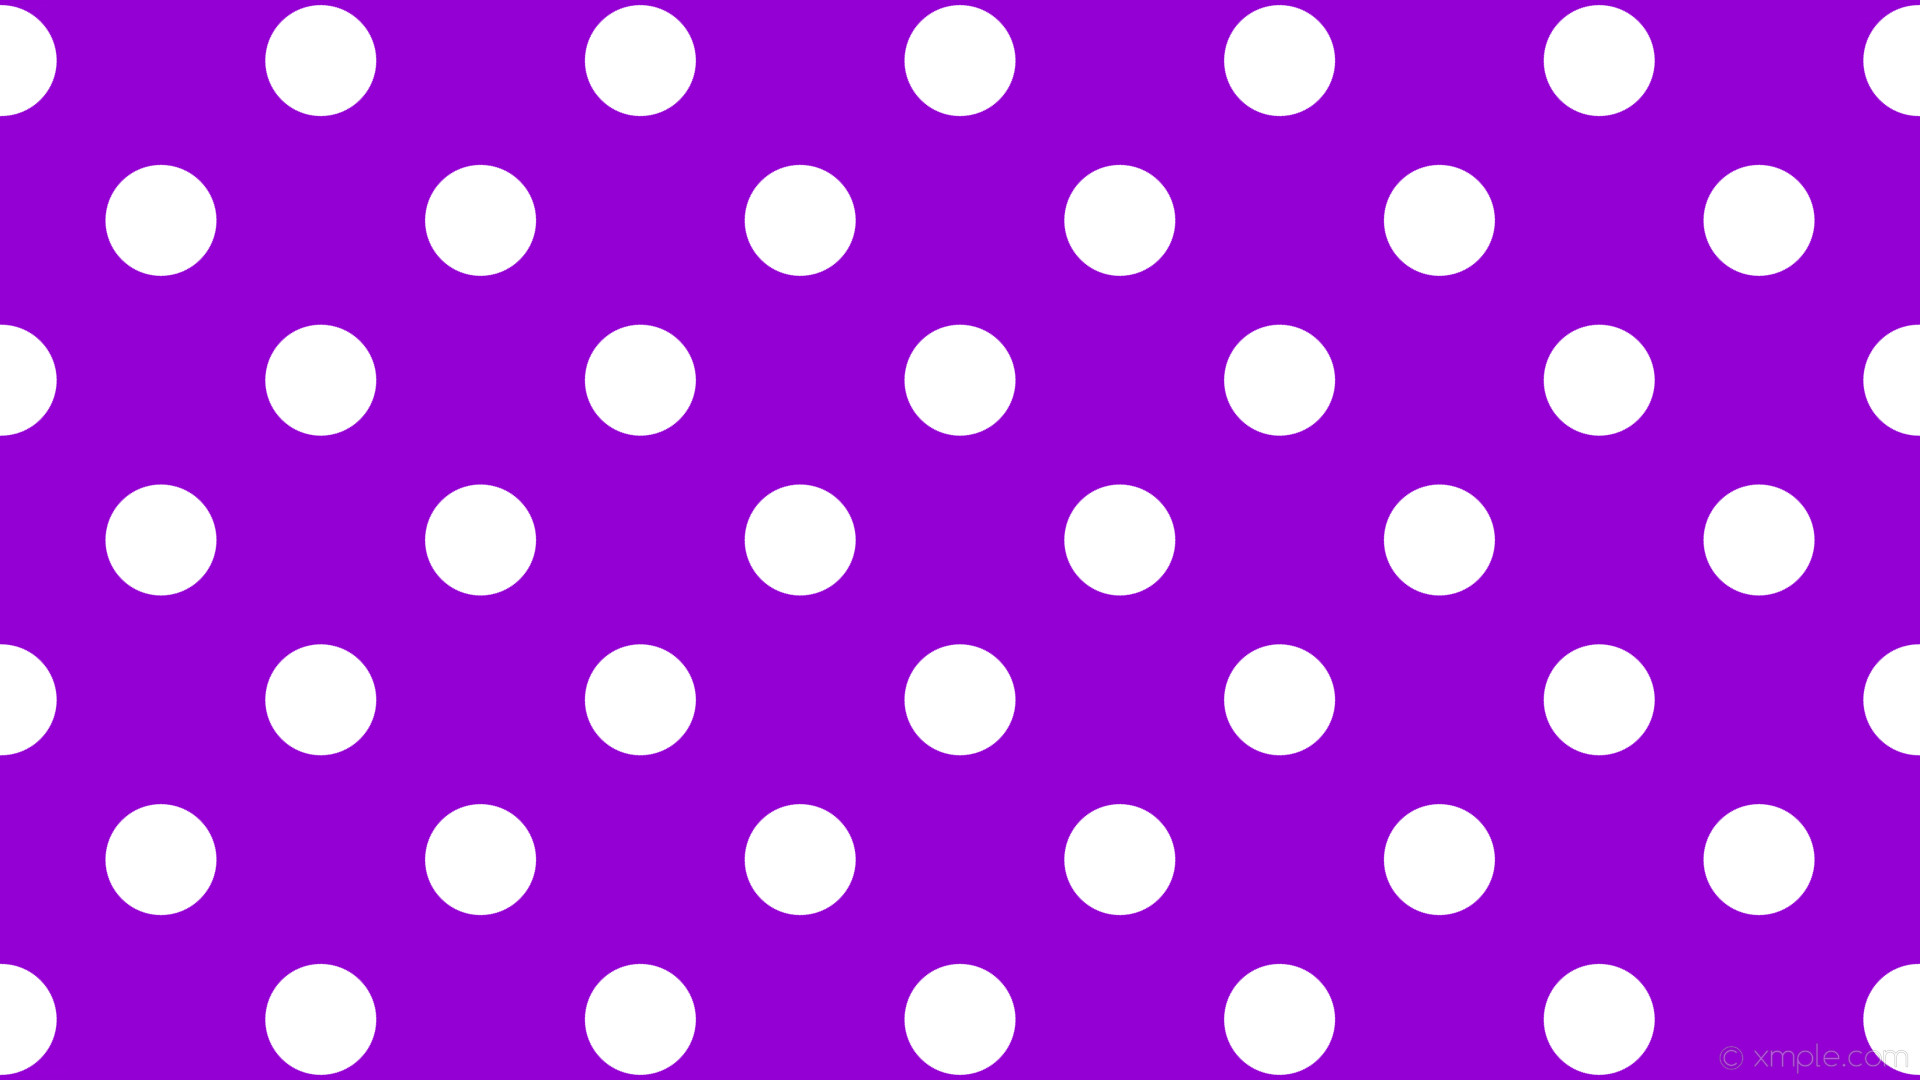 1920x1080 wallpaper white spots purple polka dots dark violet #9400d3 #ffffff 45Â°  111px 226px